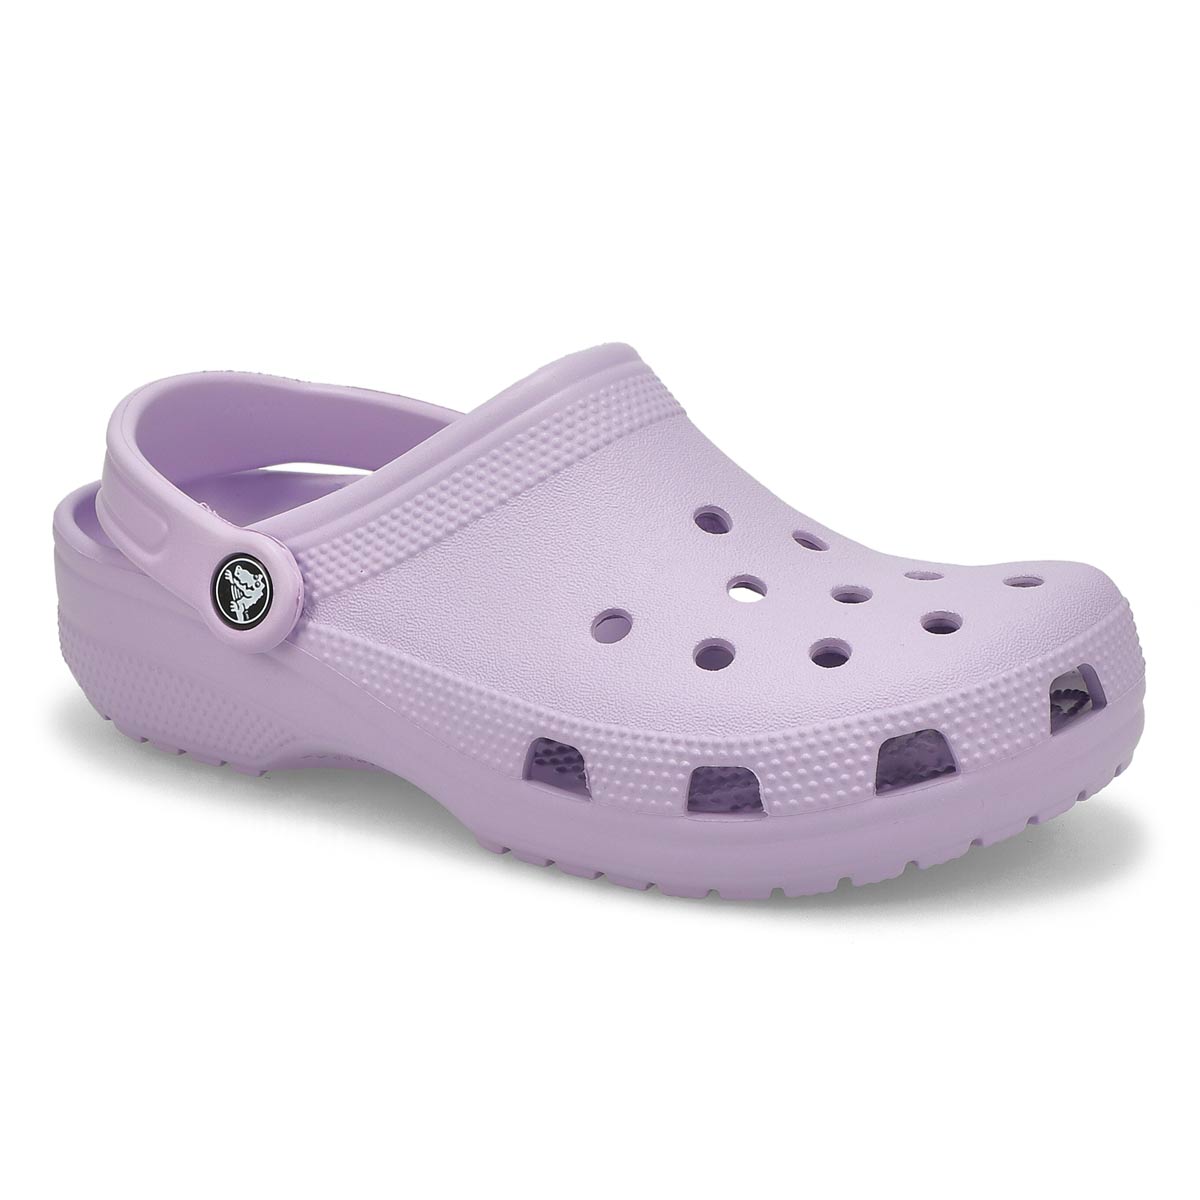 softmoc crocs Online shopping has never 